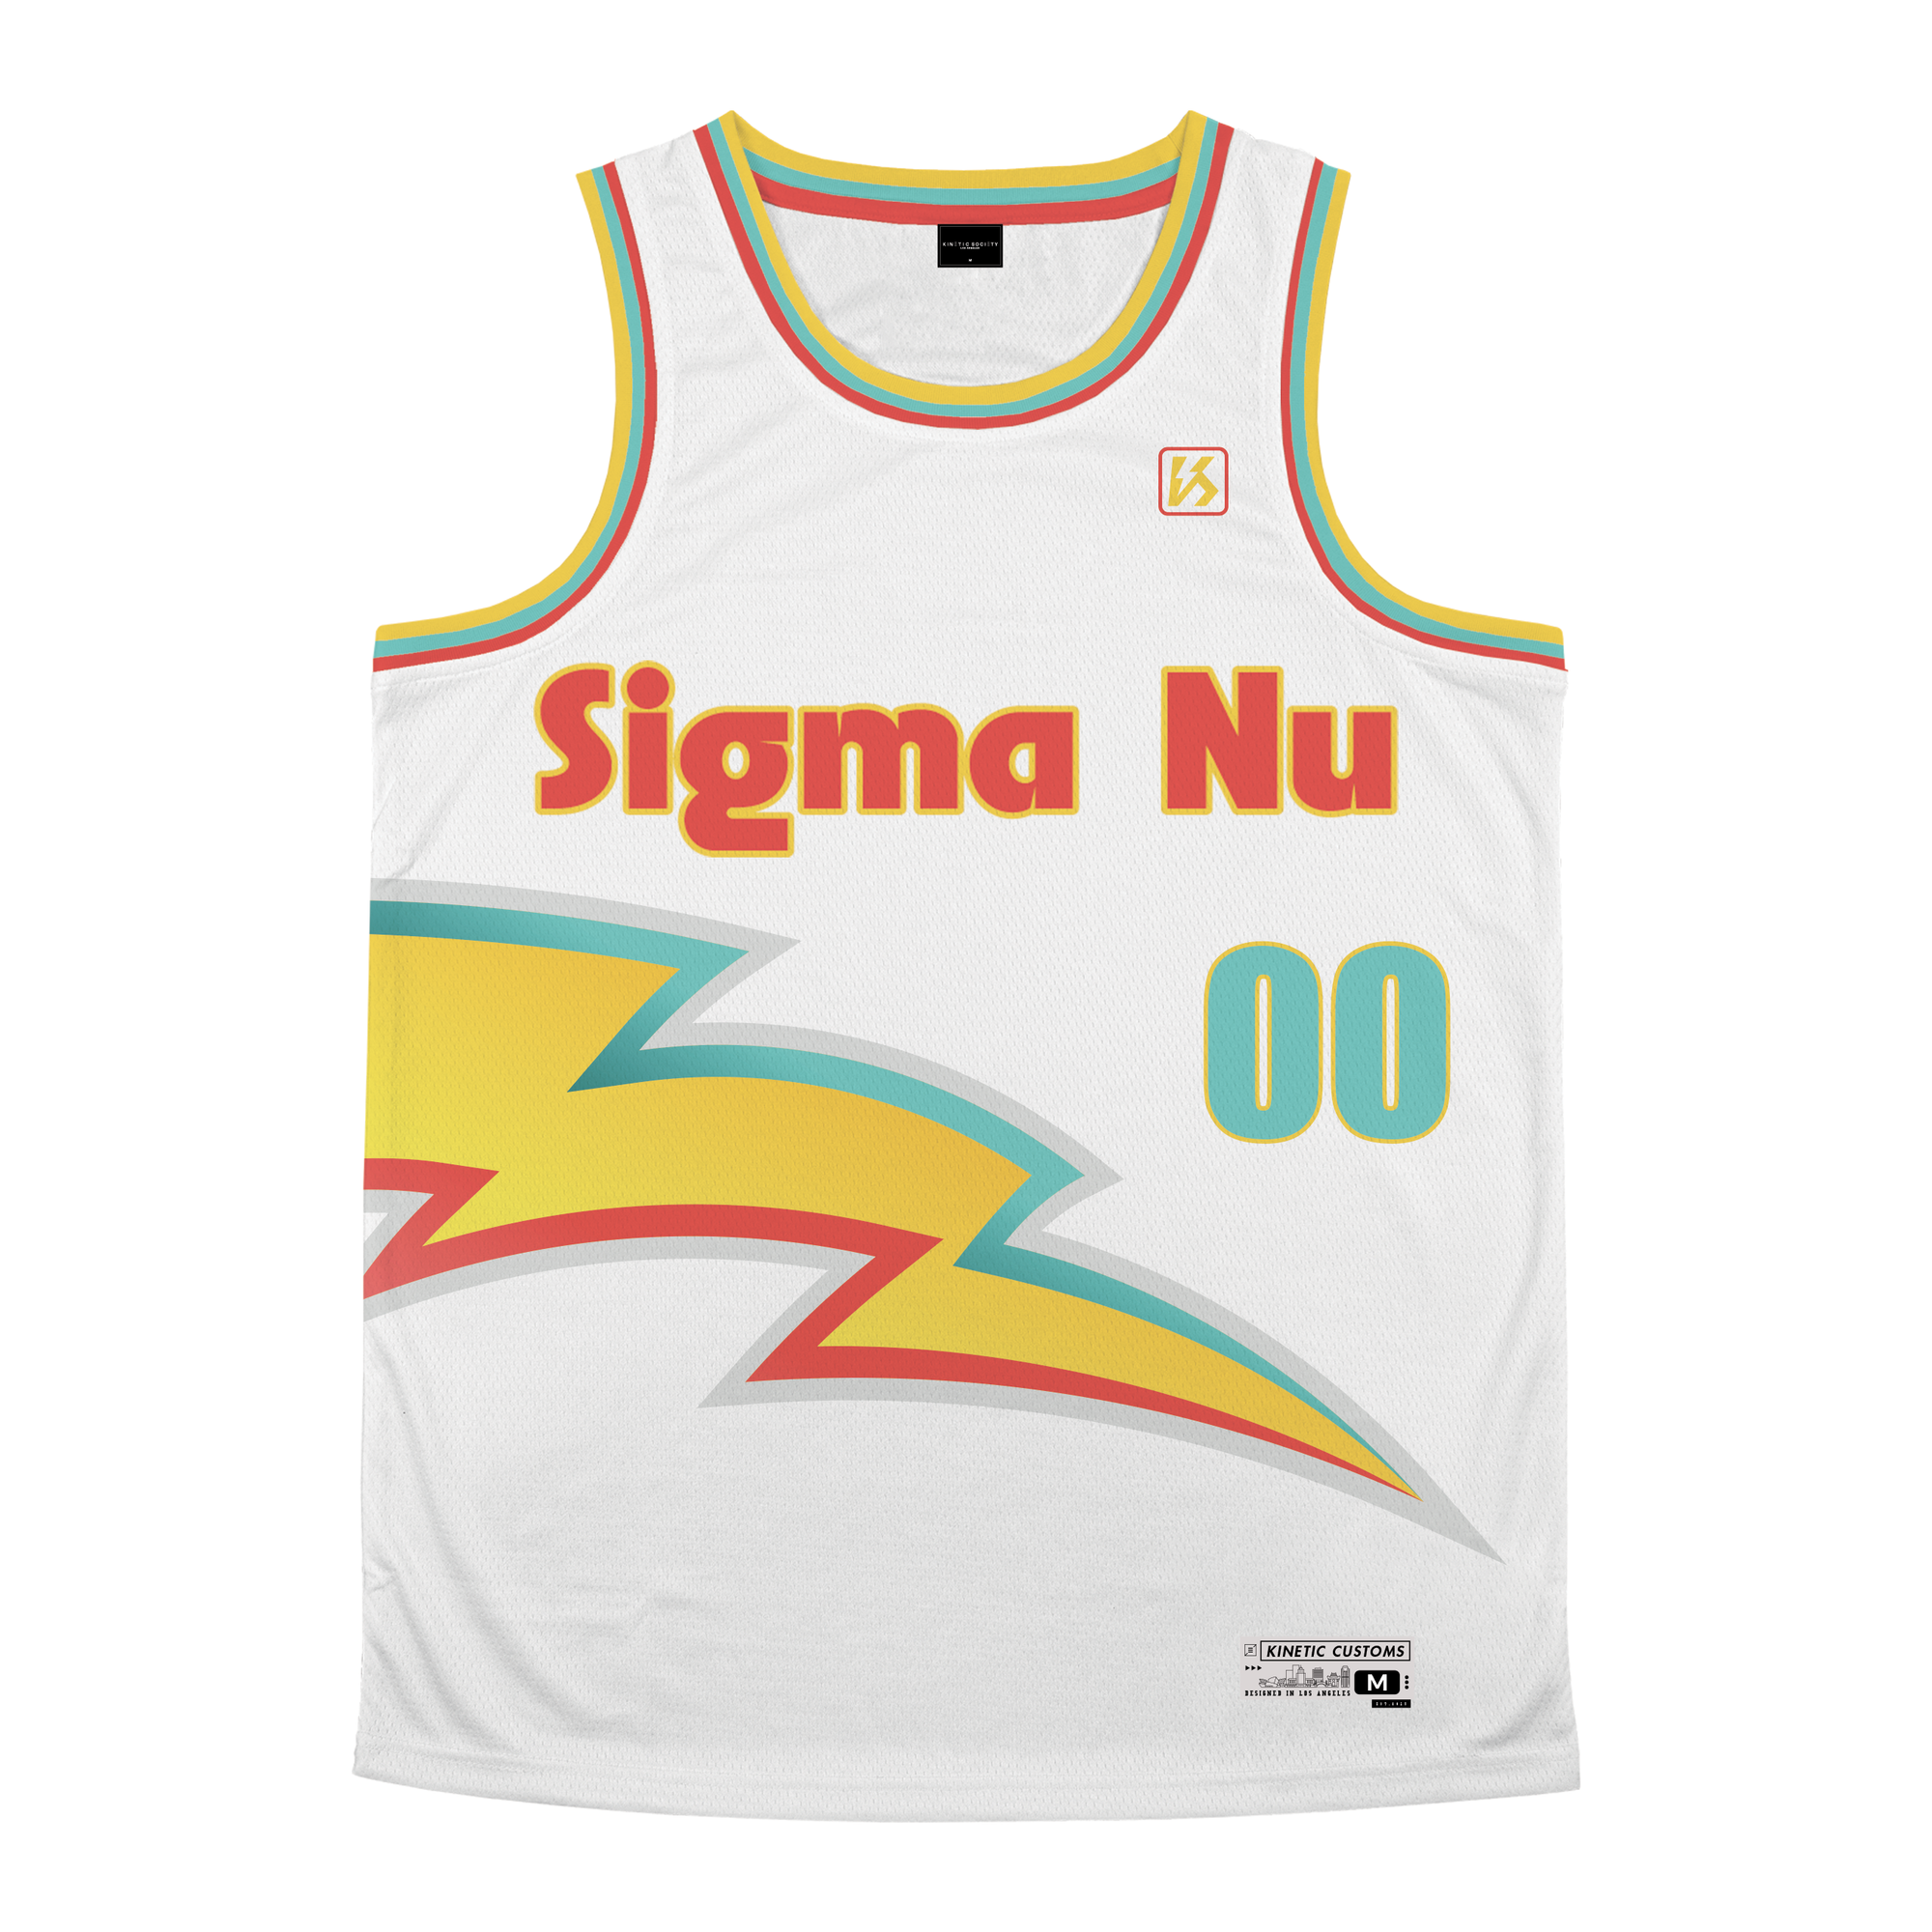 Sigma Nu - Bolt Basketball Jersey